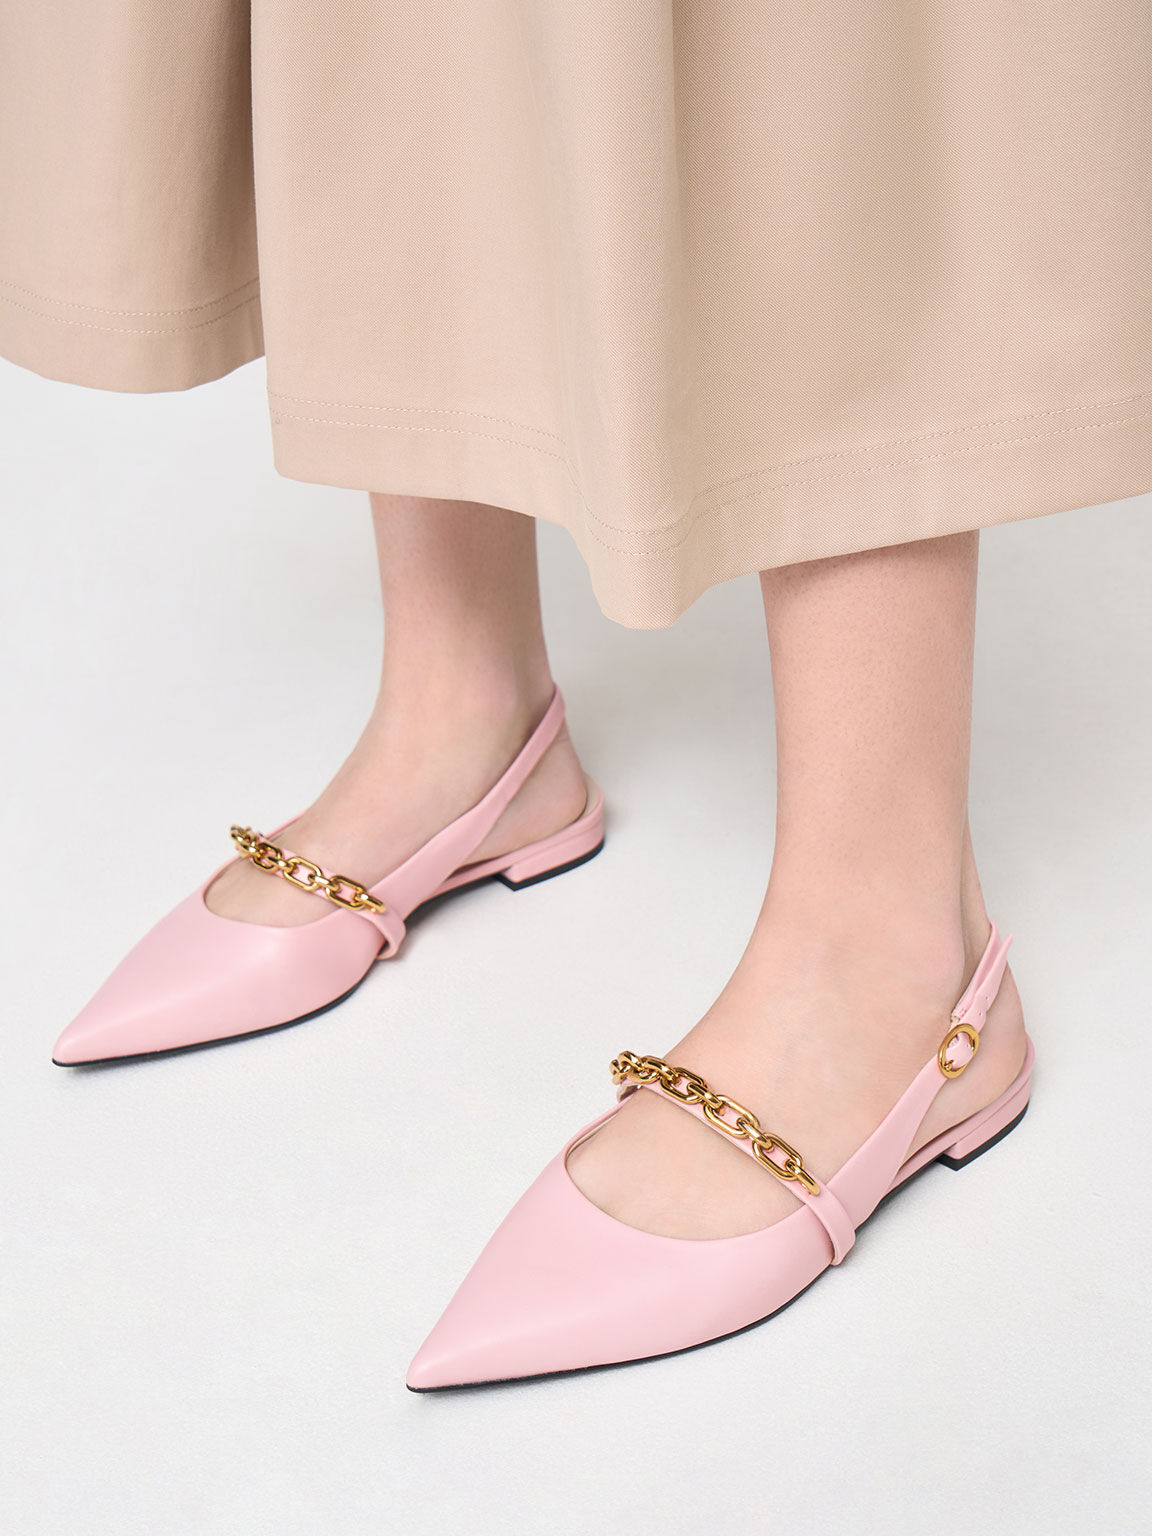 Sepatu Flats Chain-Link Strap Slingback, Light Pink, hi-res